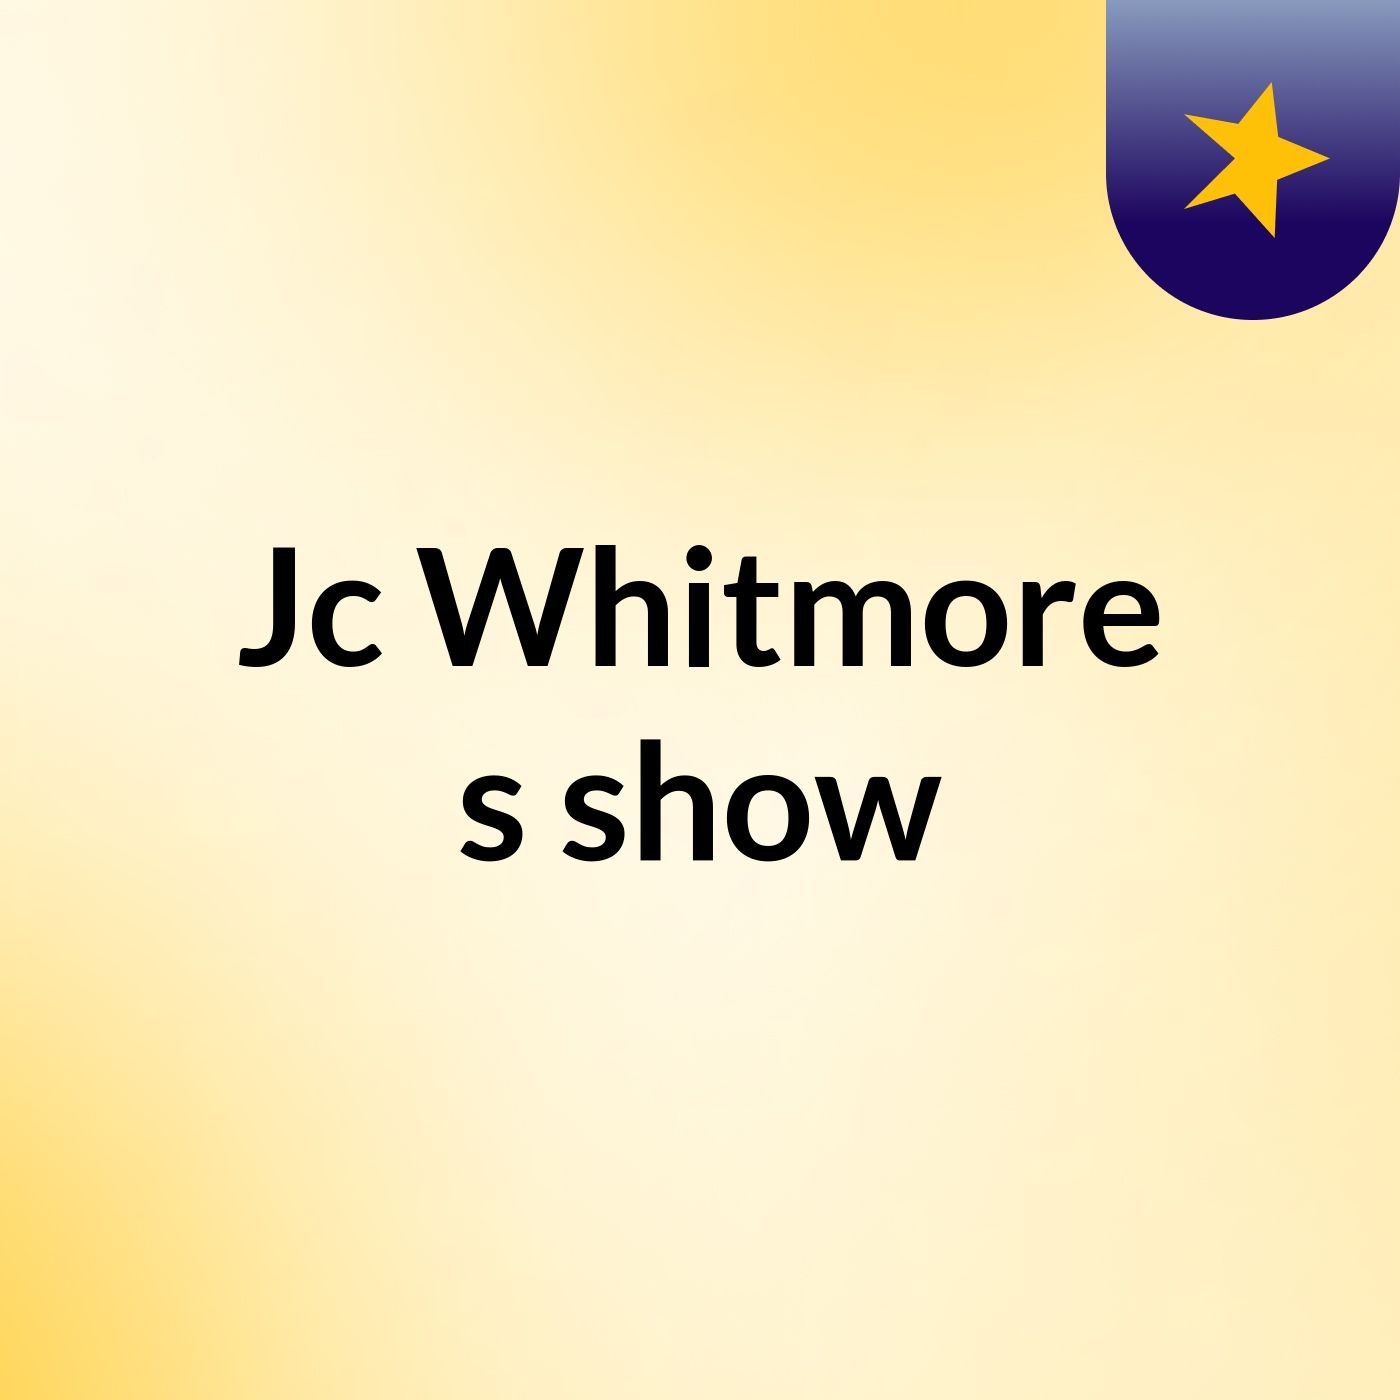 Jc Whitmore's show